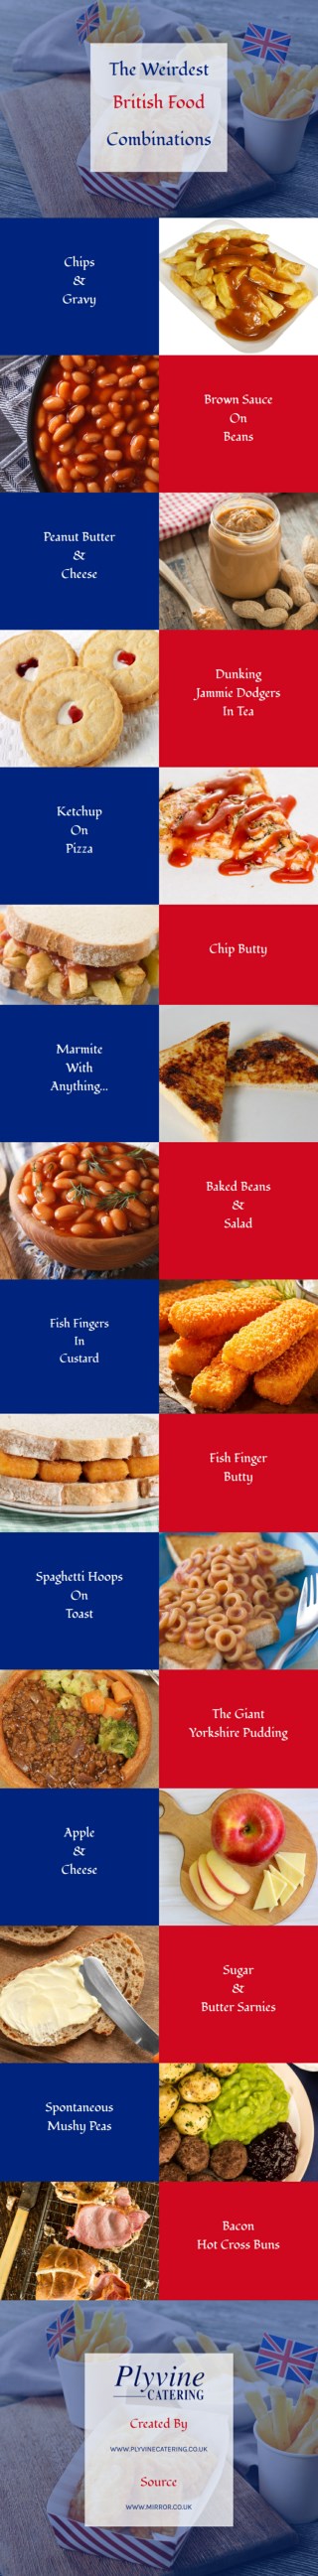 The Weirdest British Food Combinations